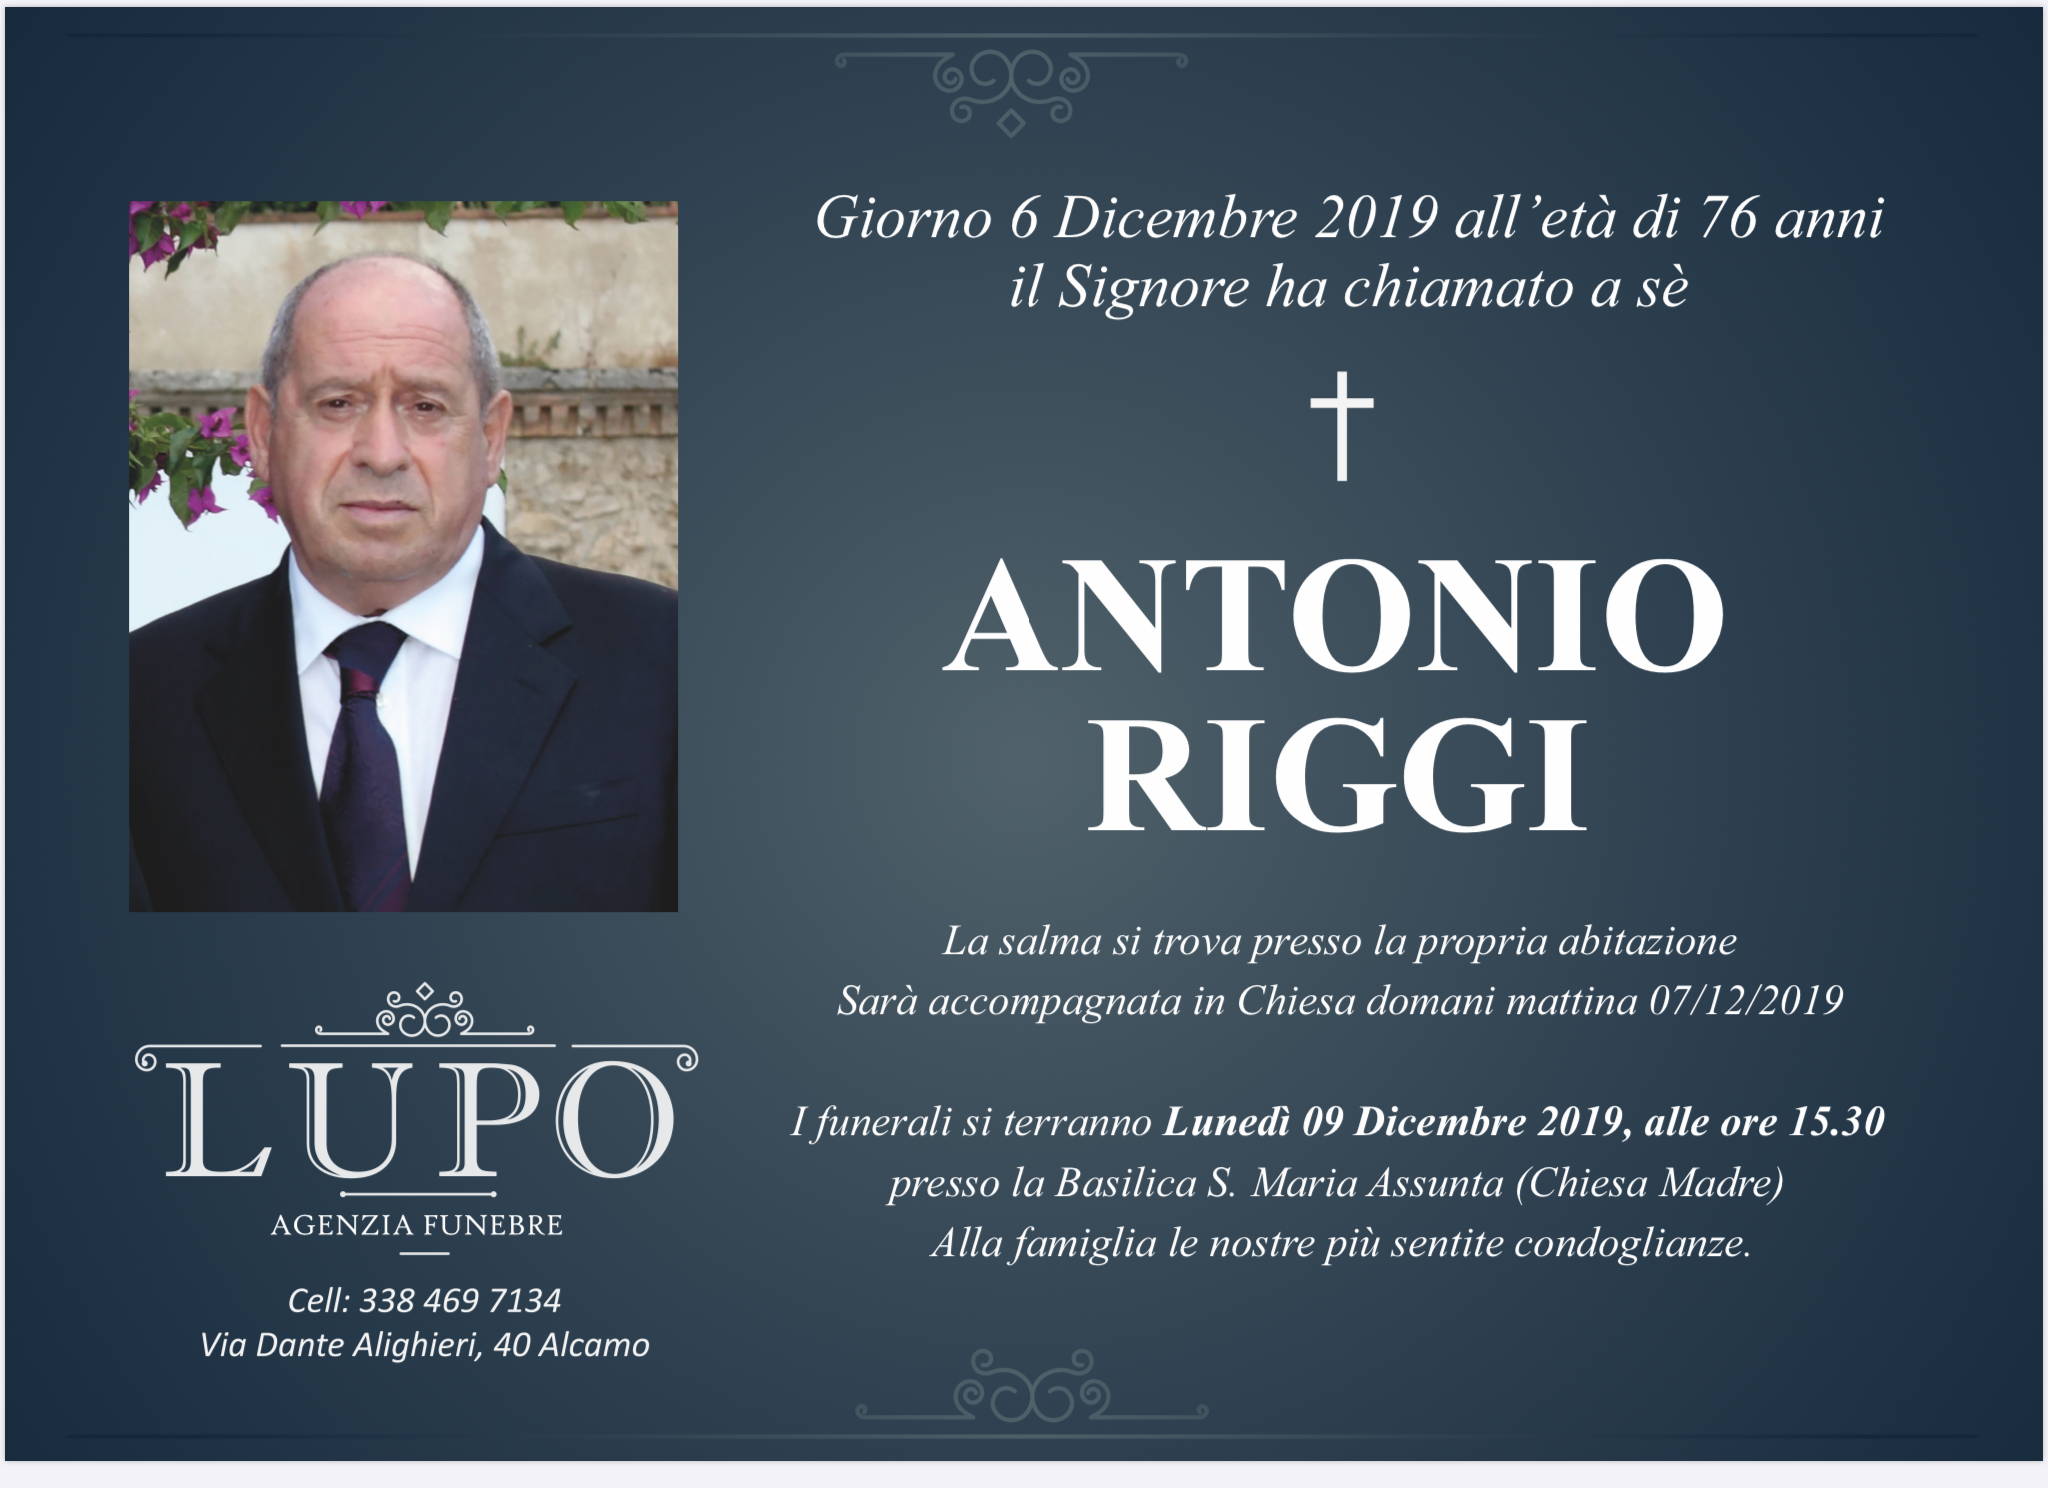 Antonio Riggi